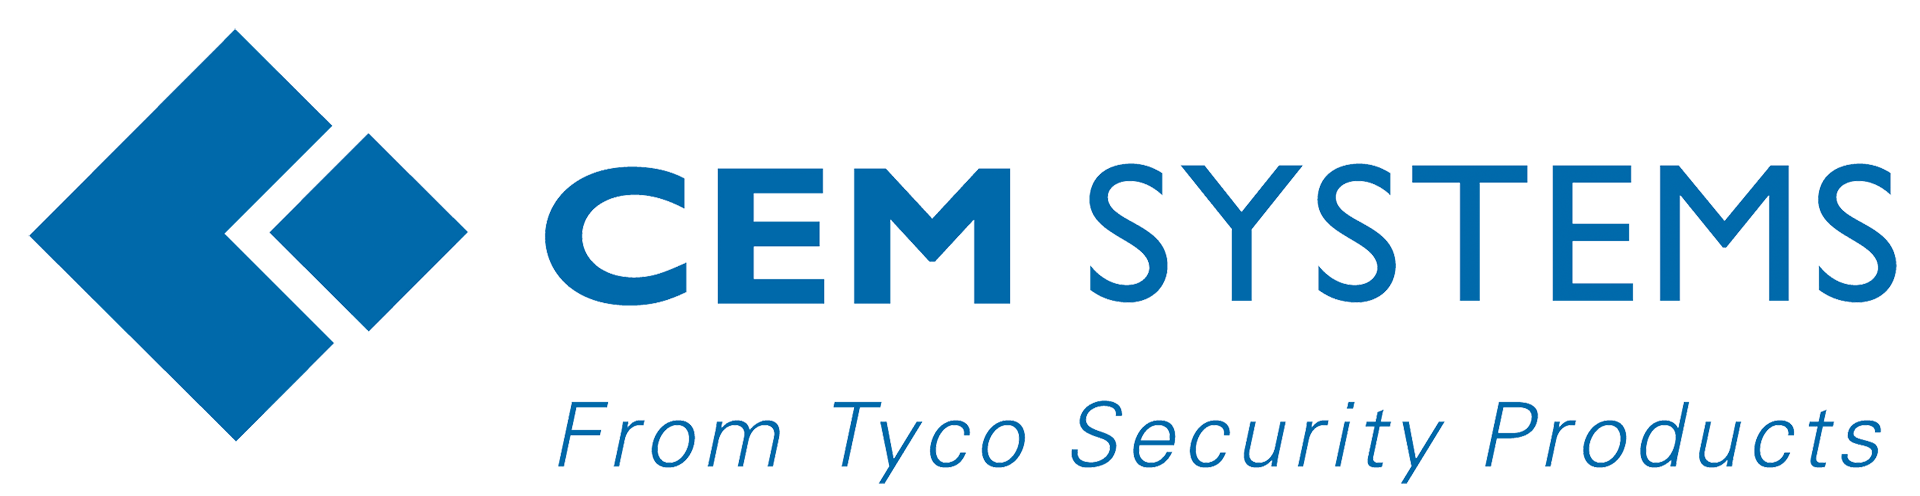 Brand-CEM Systems